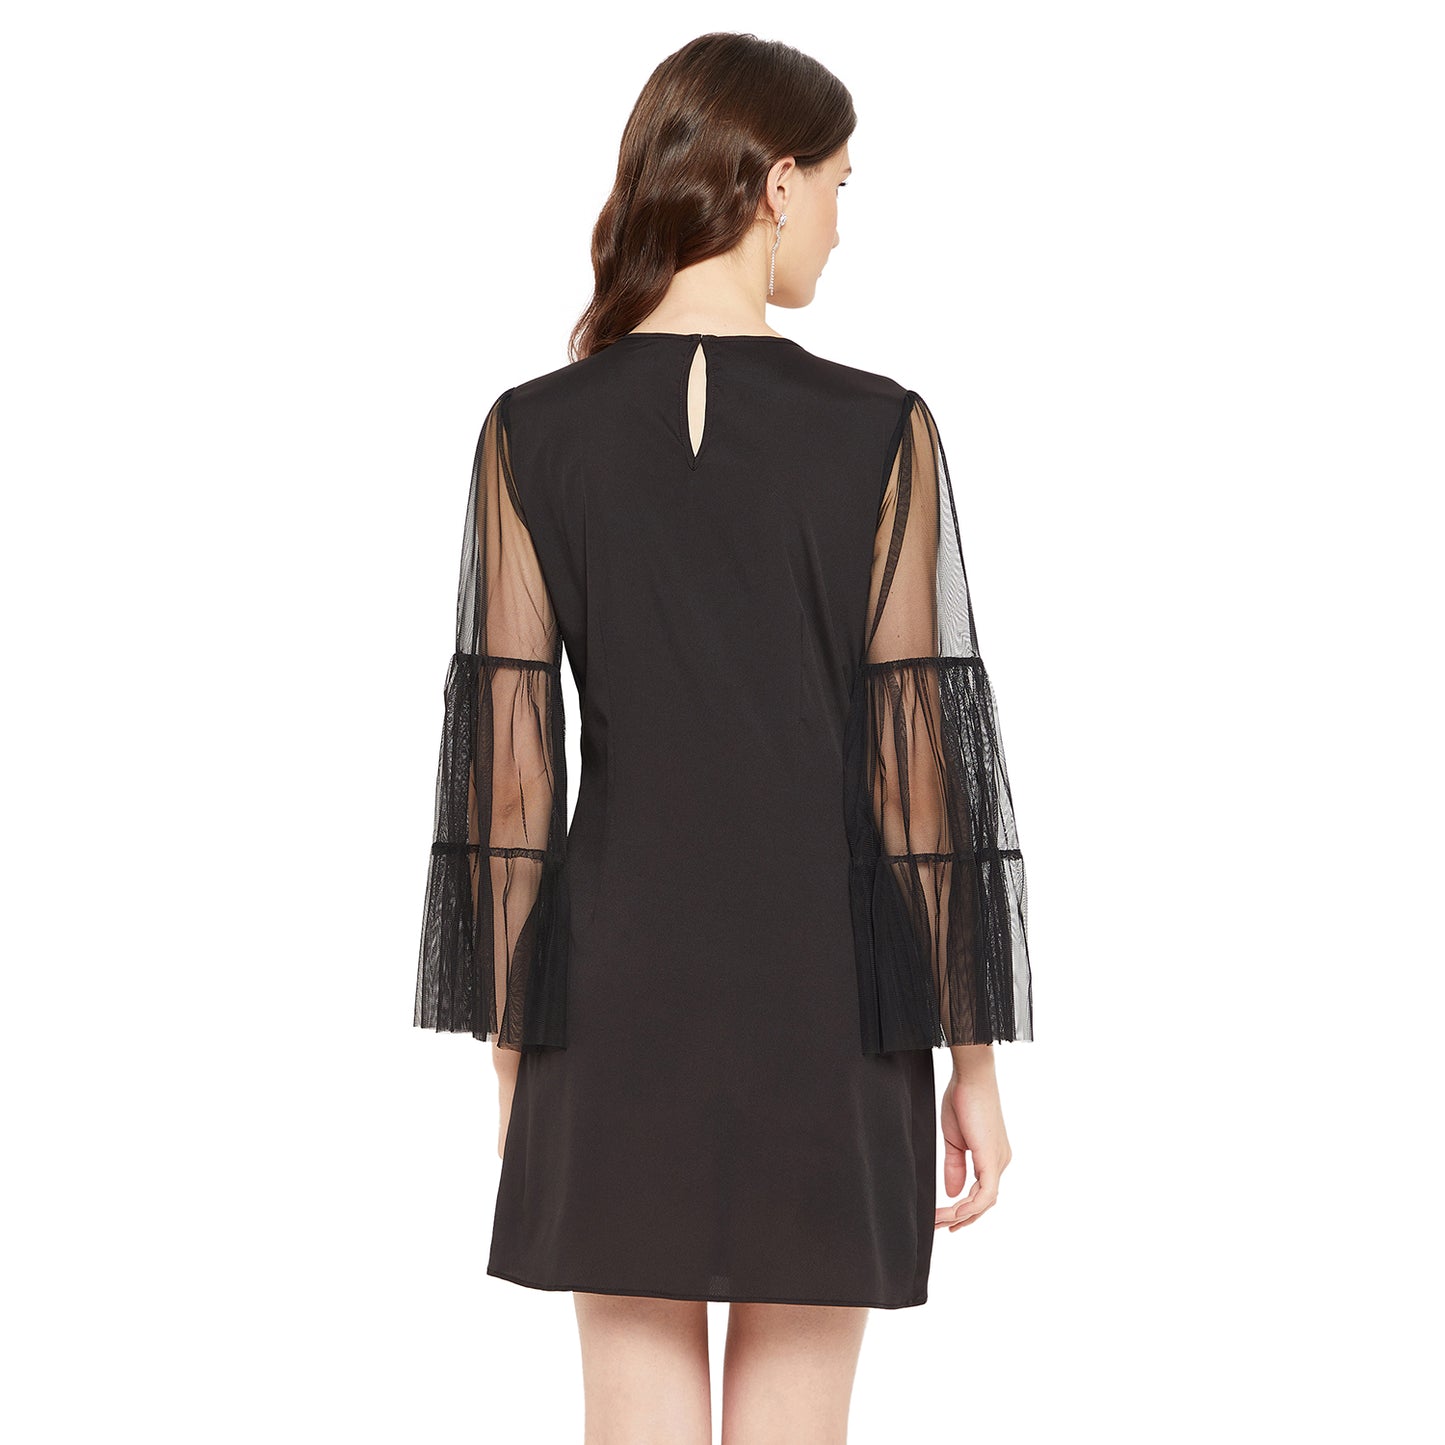 LY2 Black Fit & Flarred Net Dress